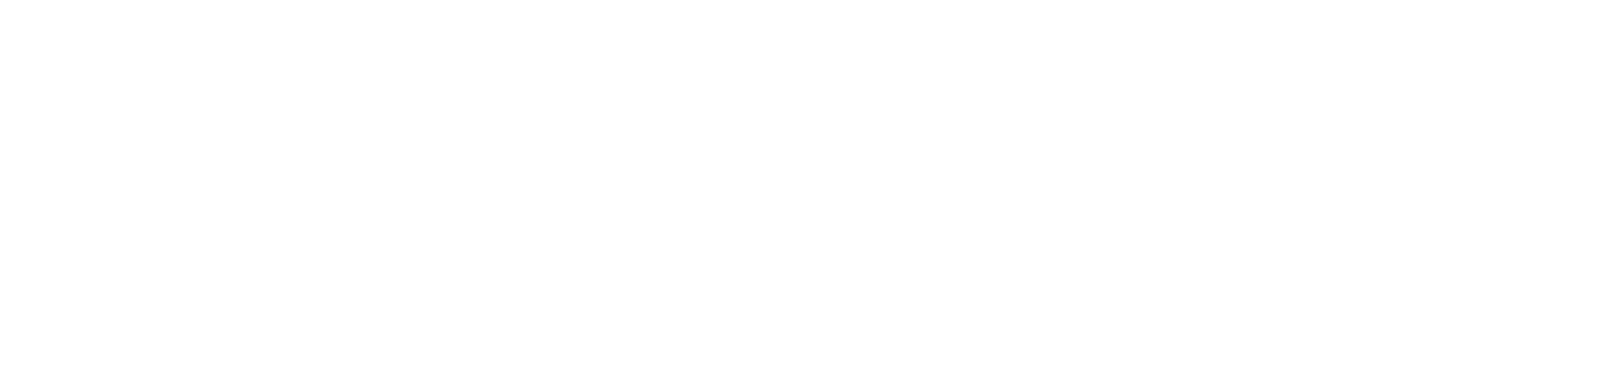 DGOffice logo white